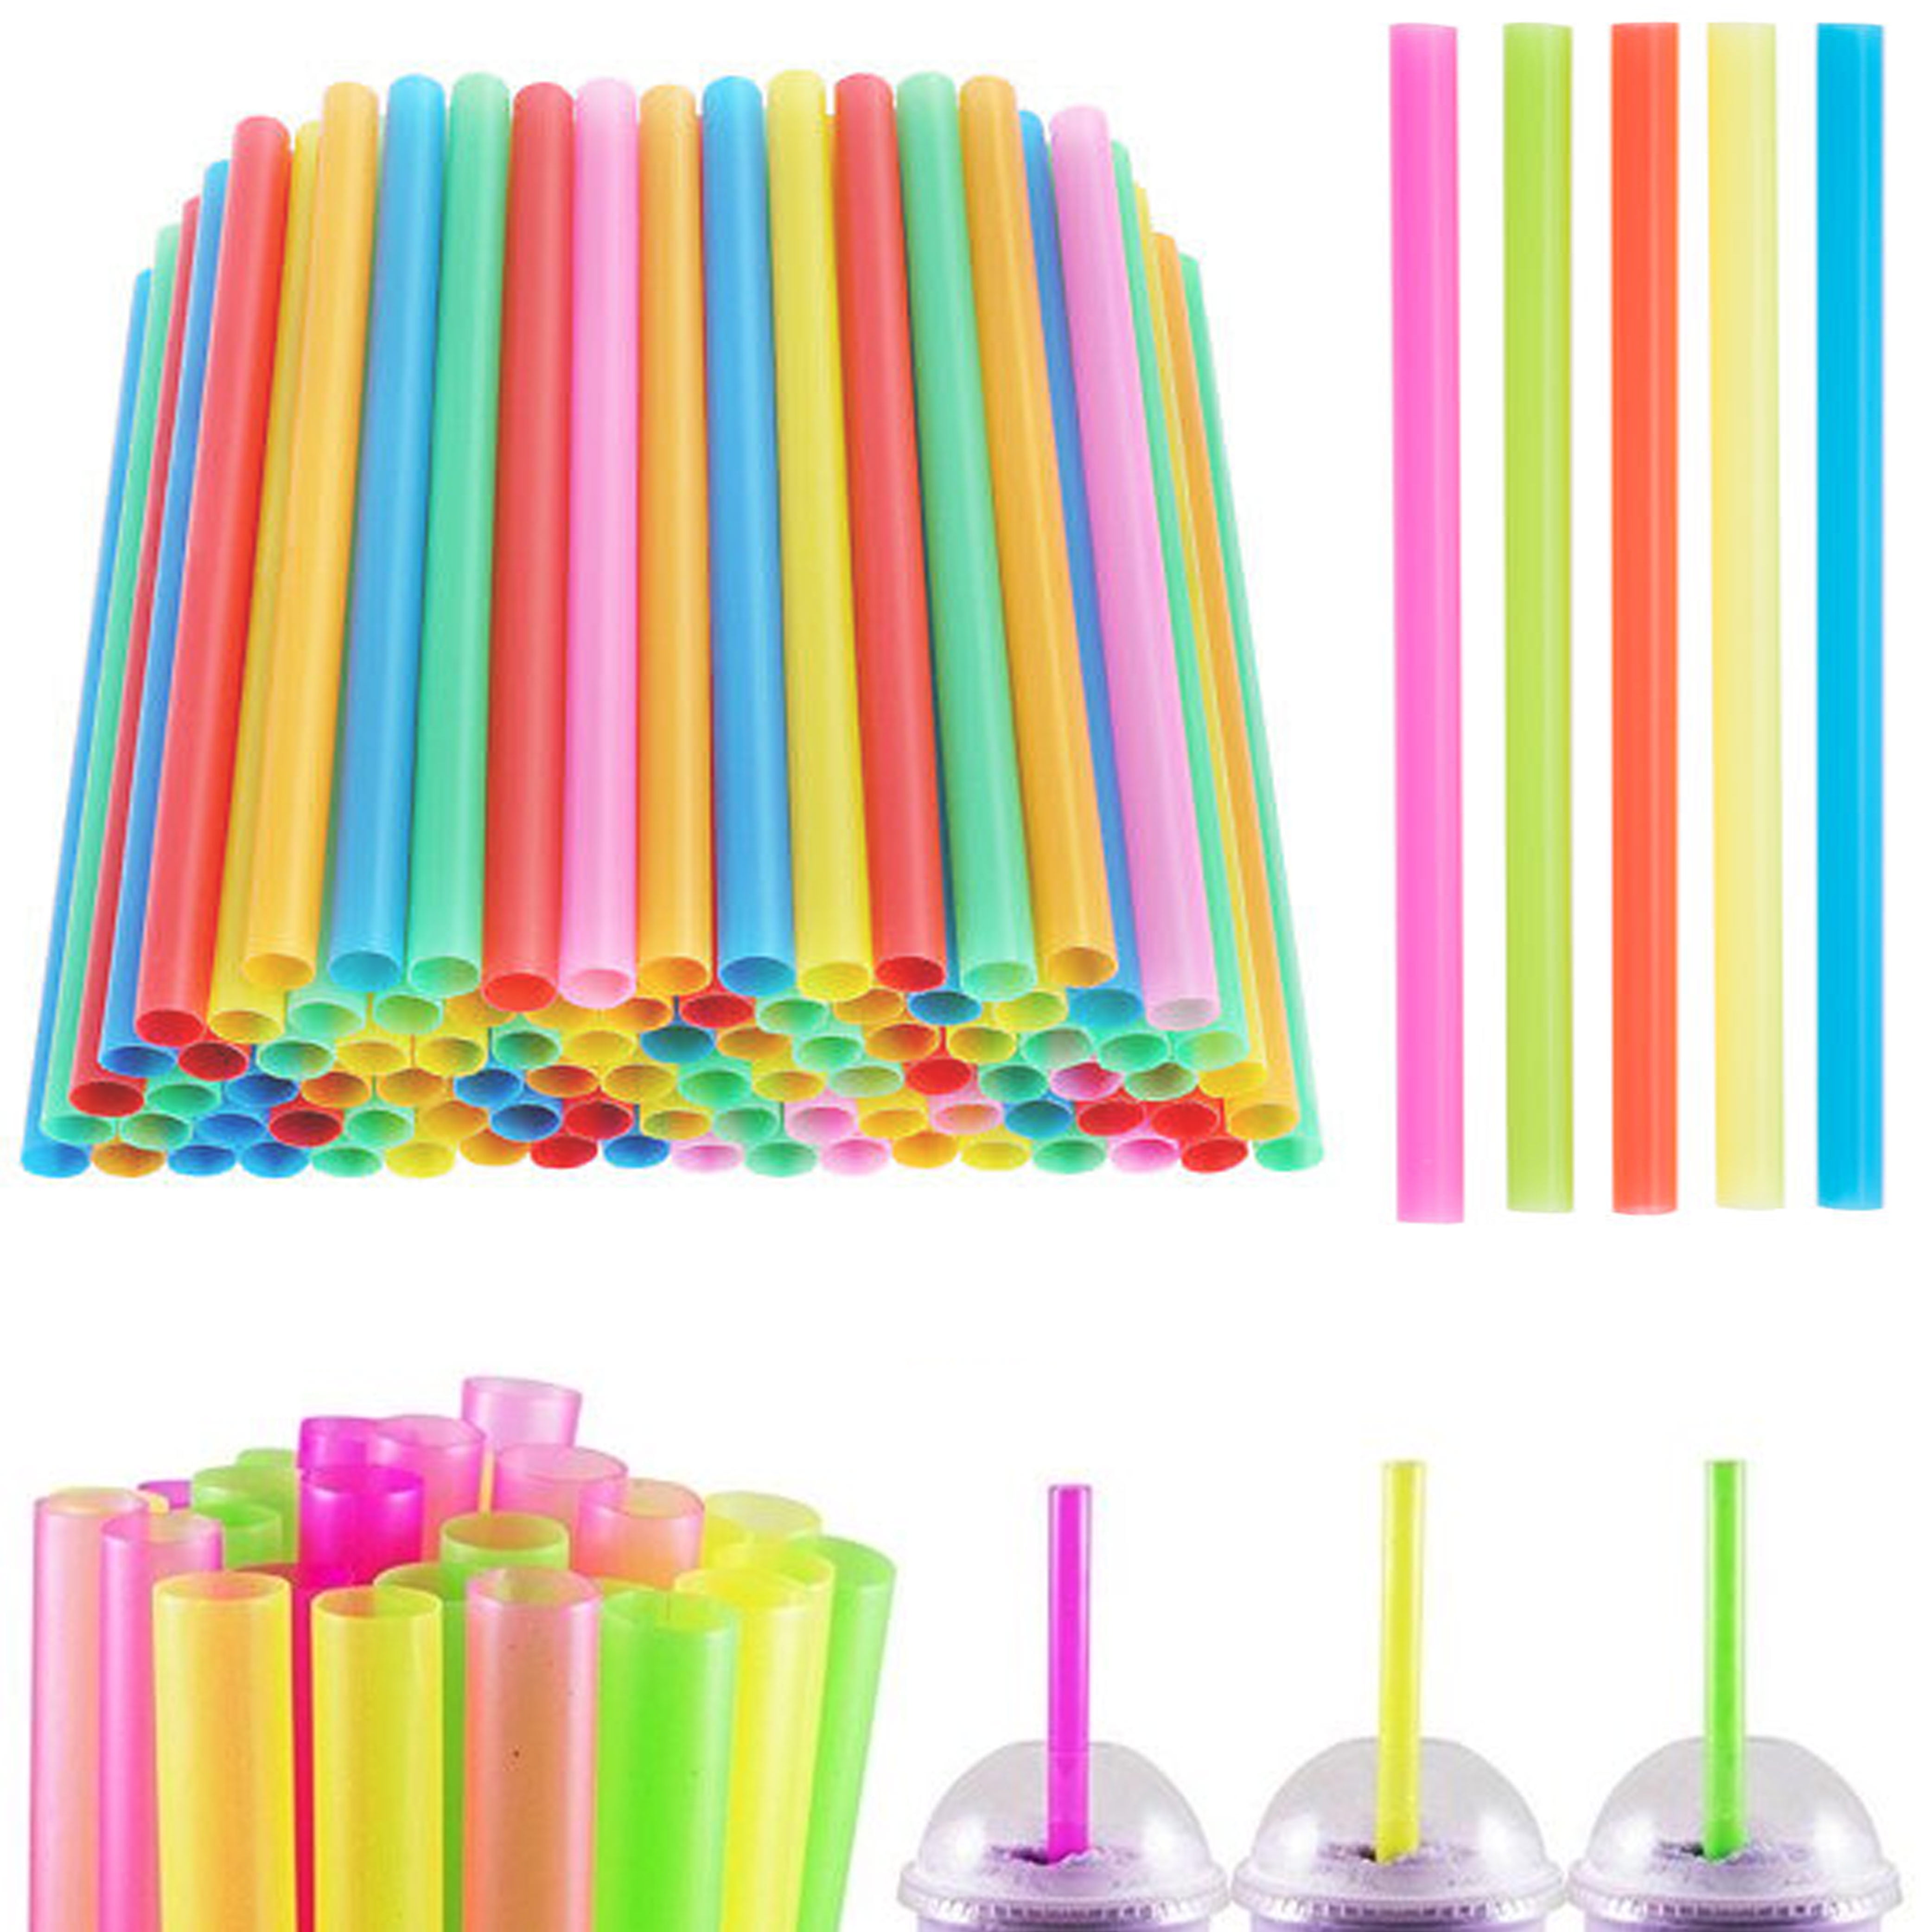 100Pcs Mix Color Large Drinking Straws For Bubble Smoothie Milkshake Prof